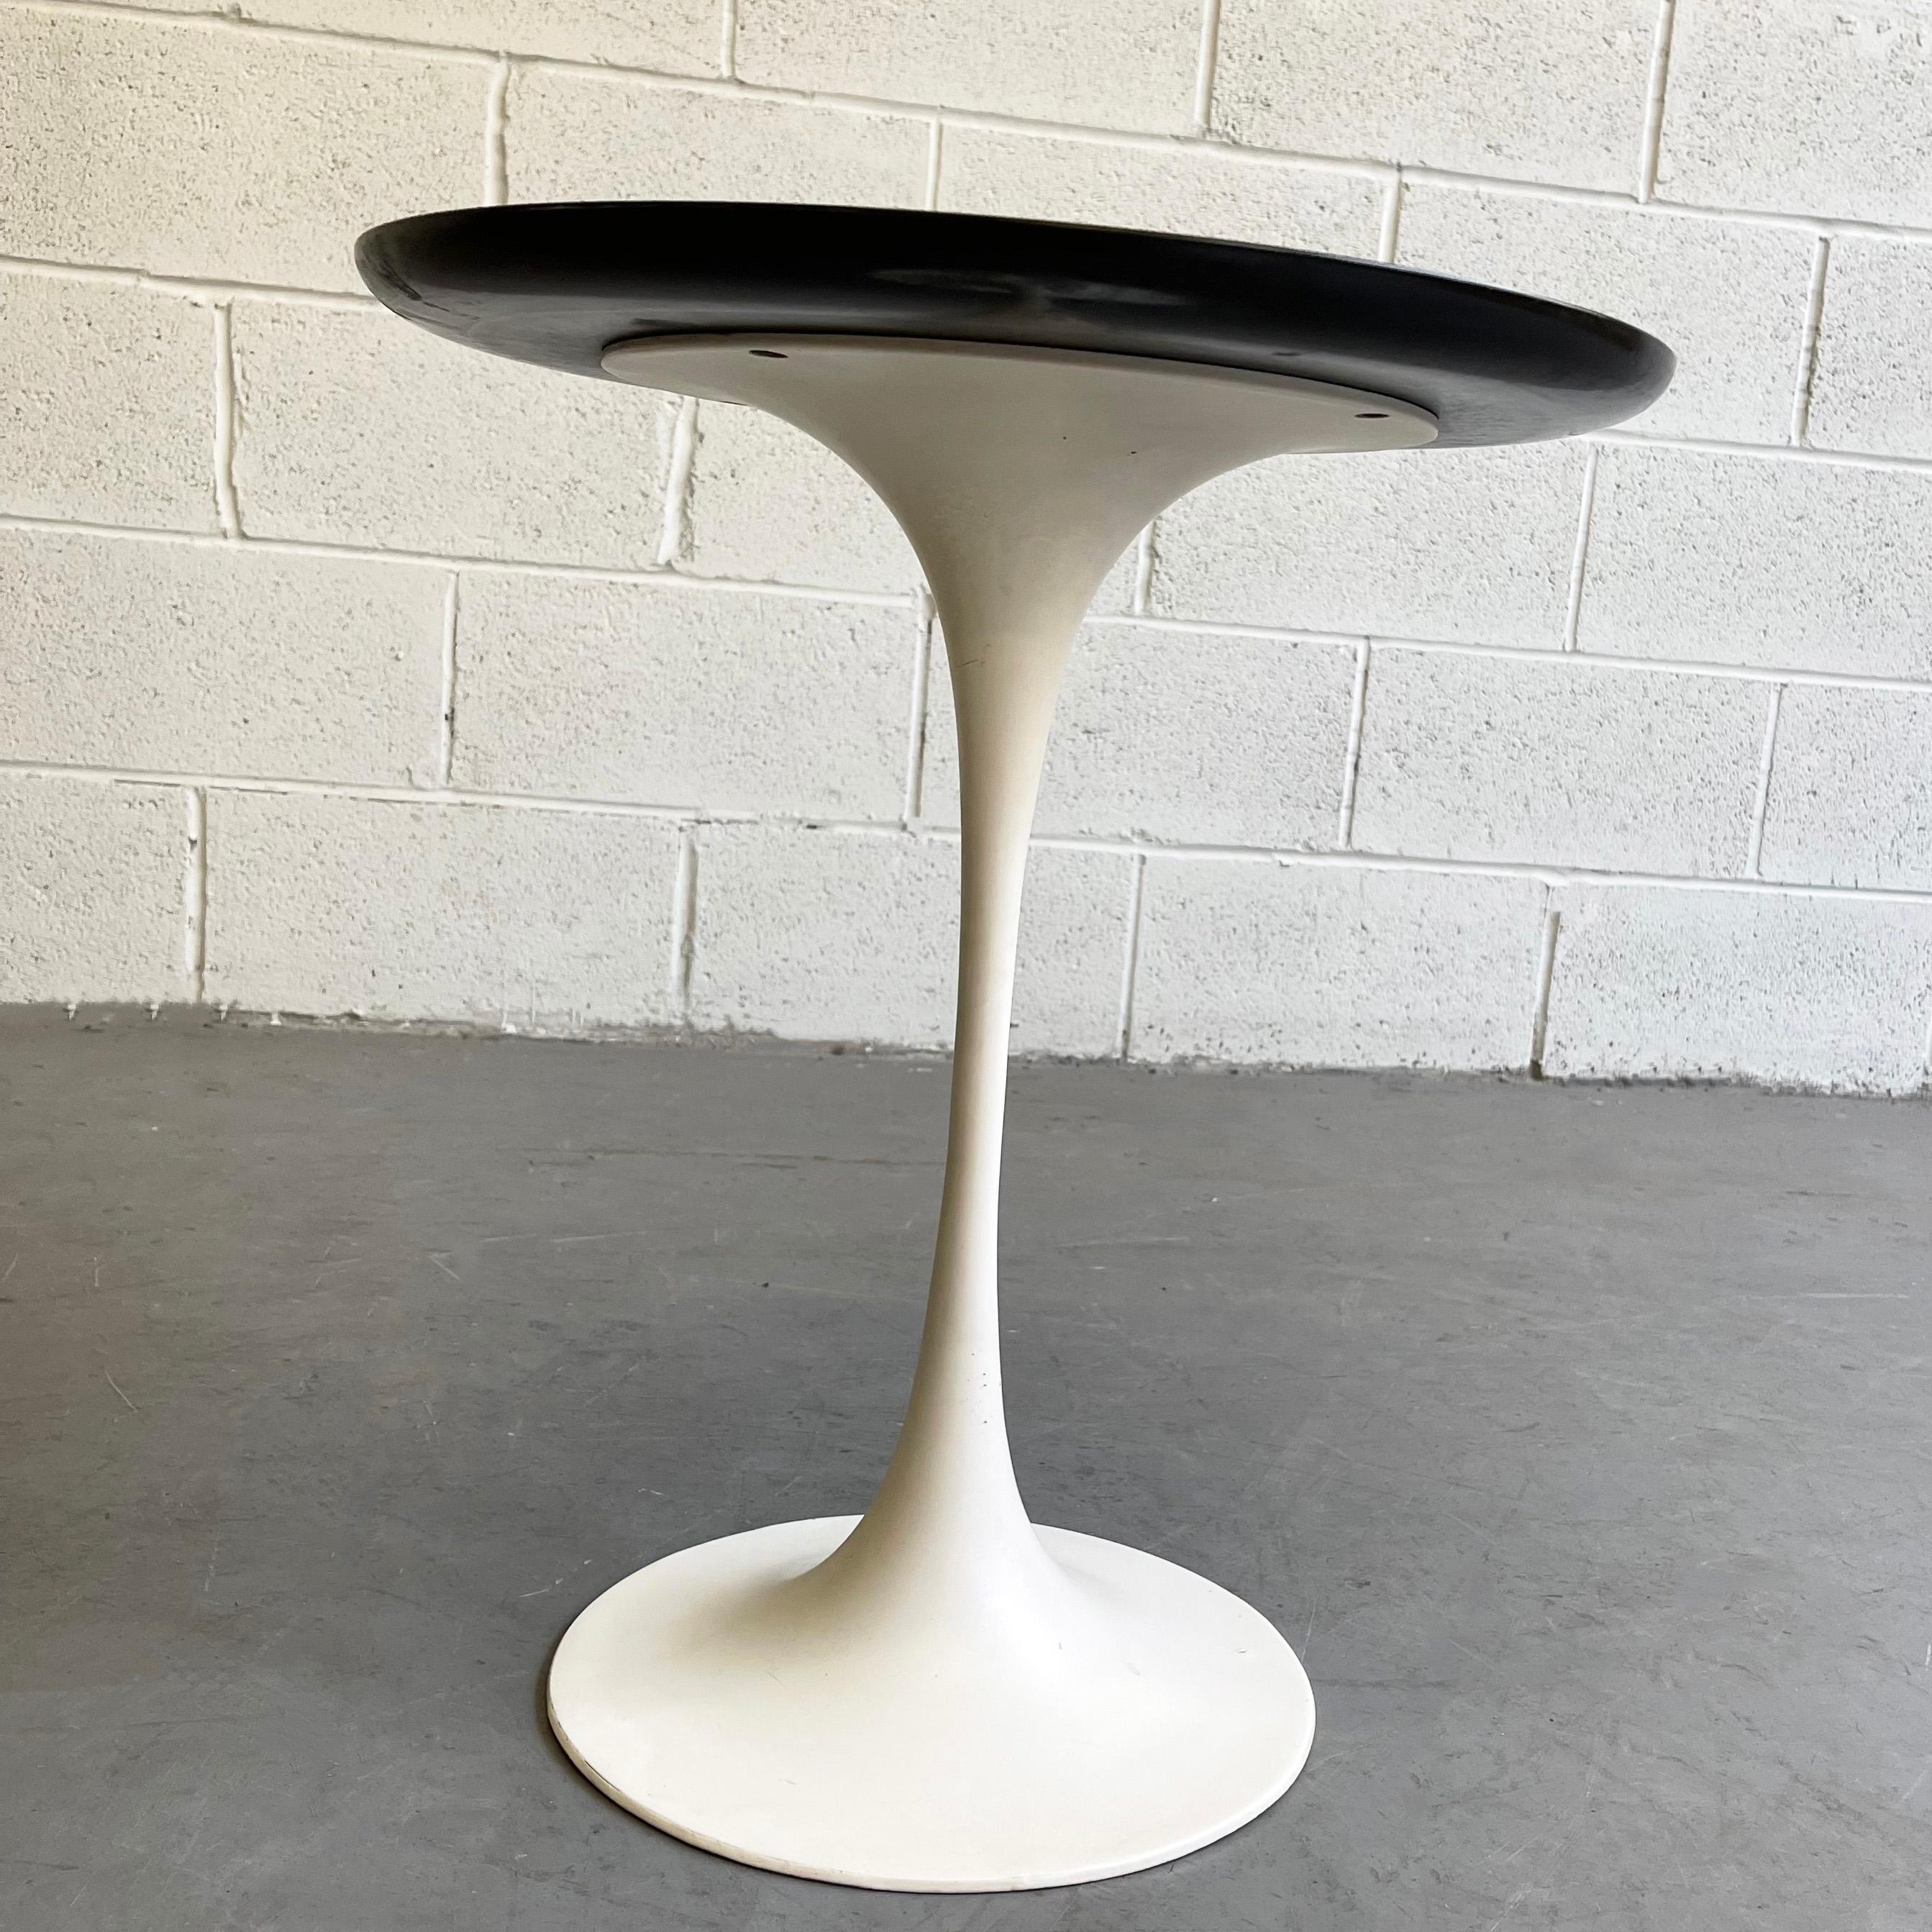 20th Century Mid-Century Modern Tulip Side Table by Eero Saarinen For Knoll